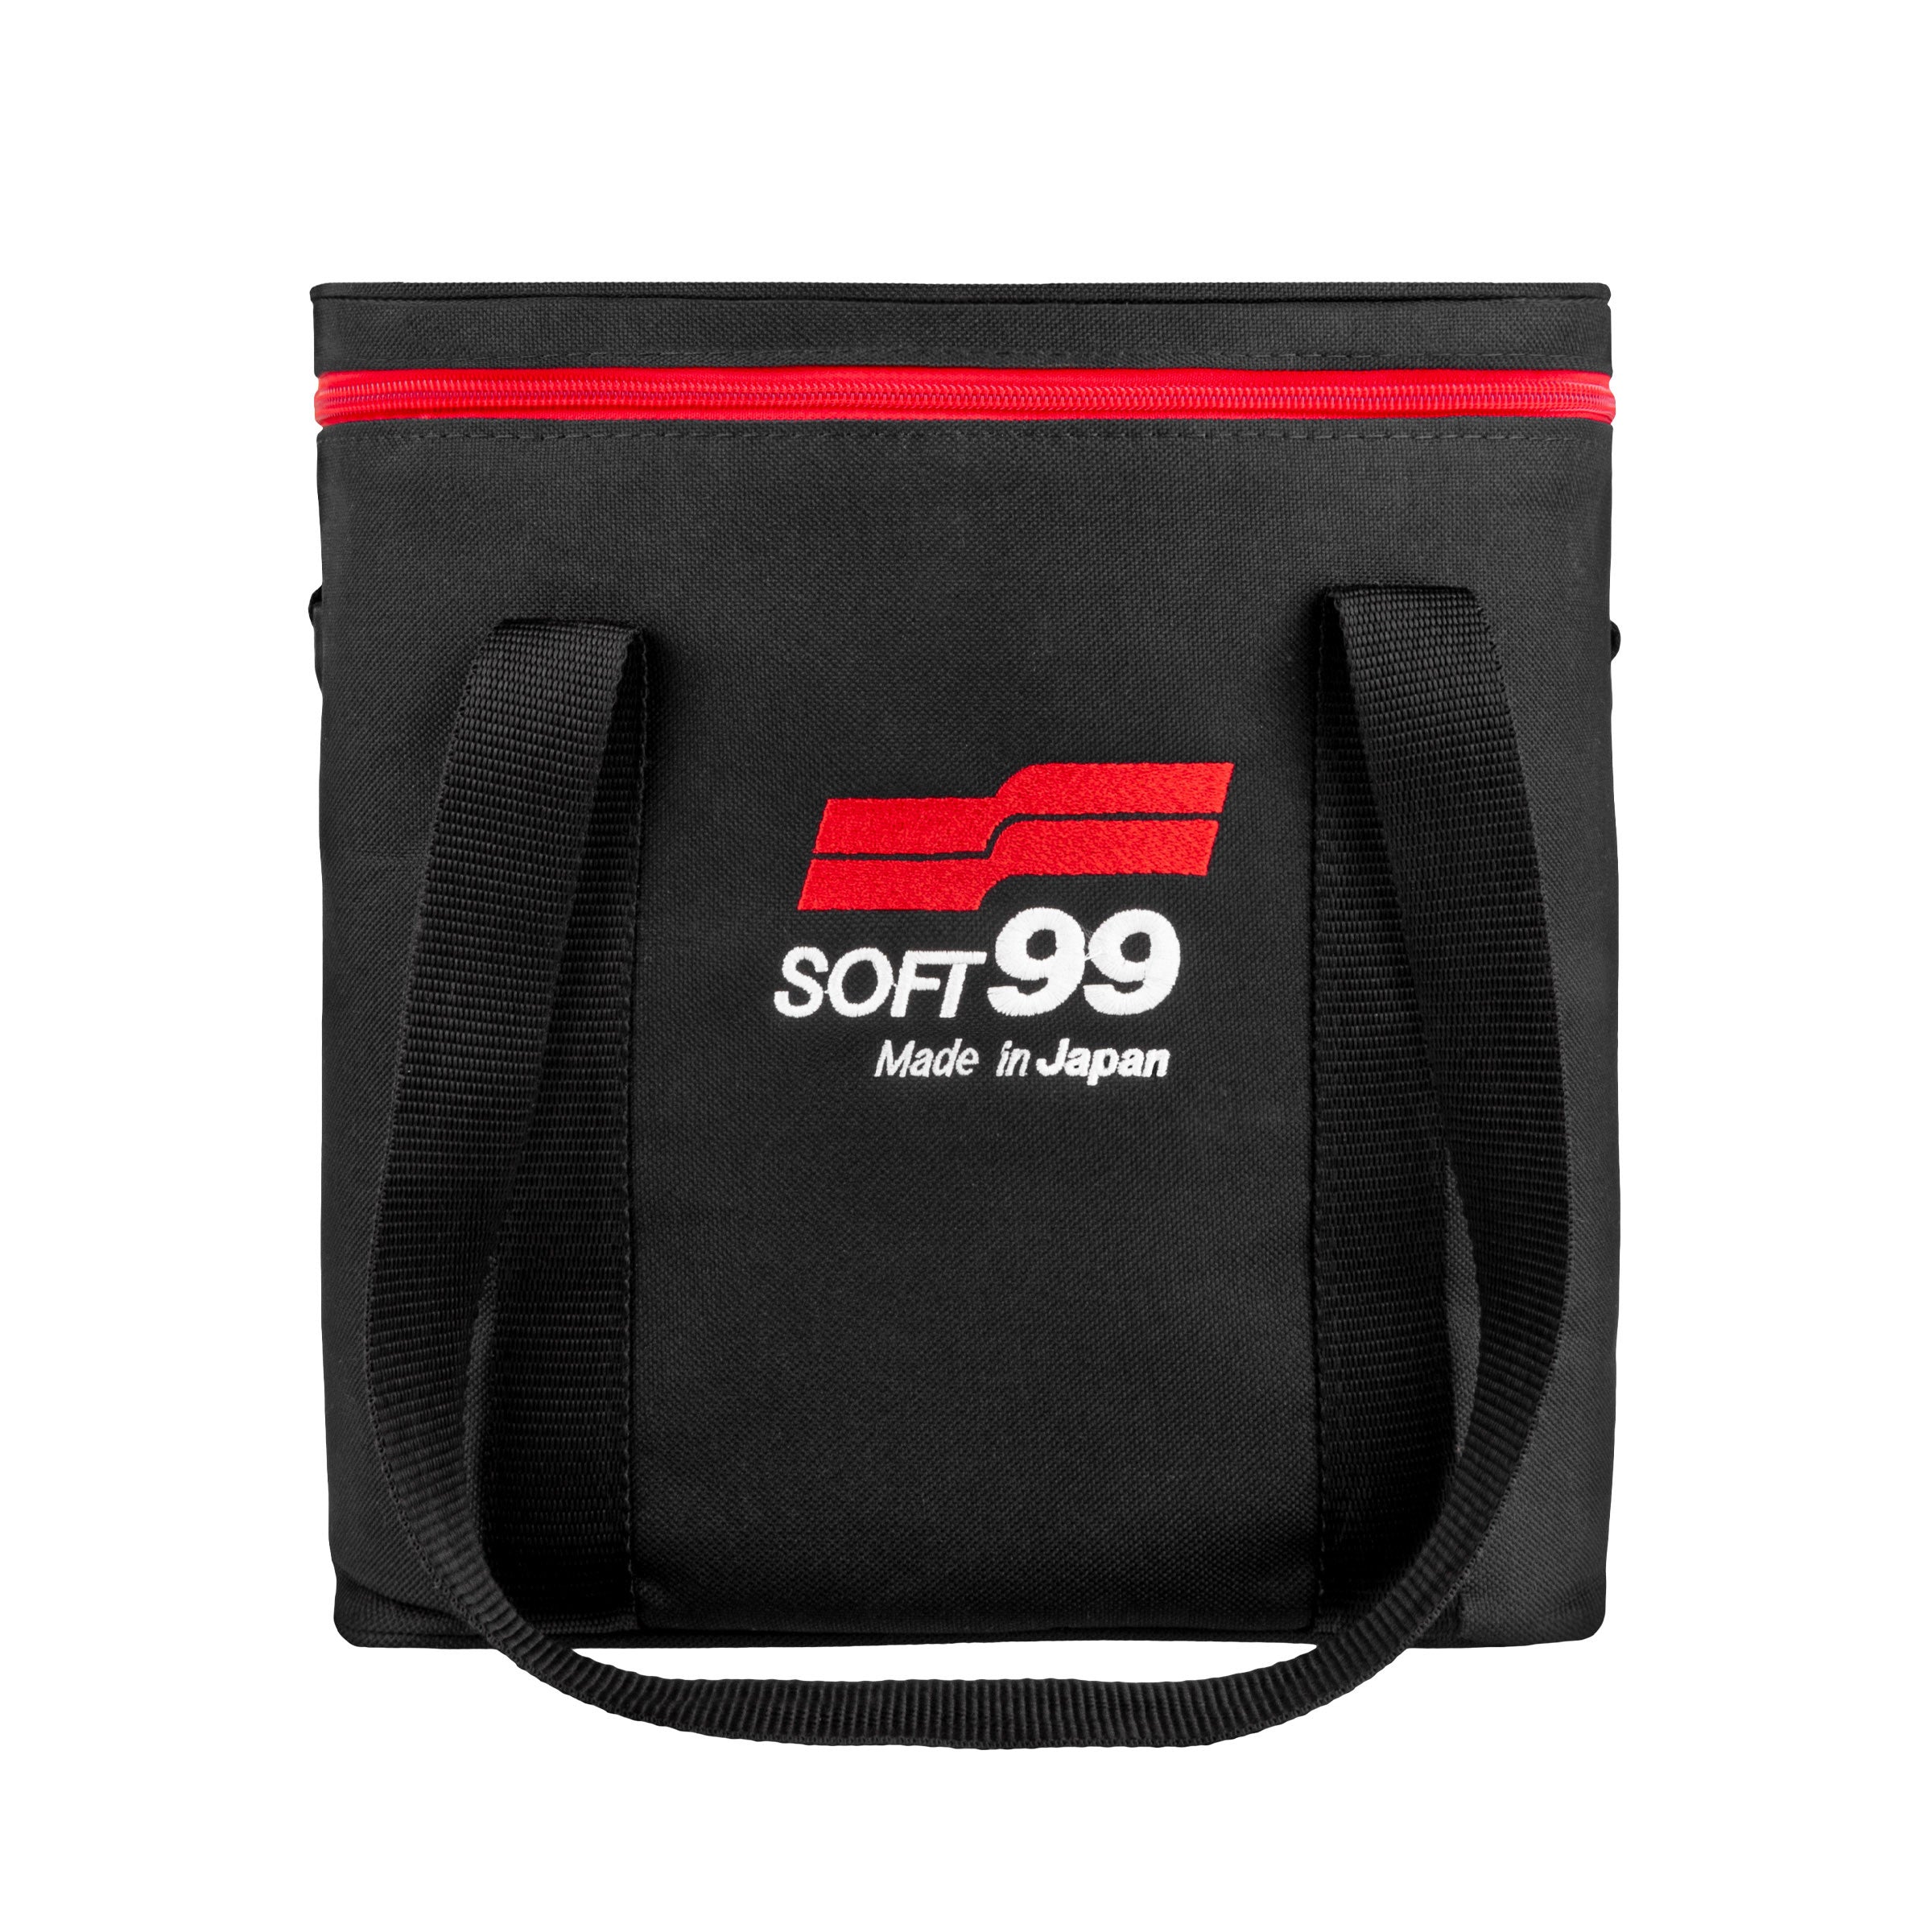 SOFT99 Premium Gift Set Dark with Detailing Bag